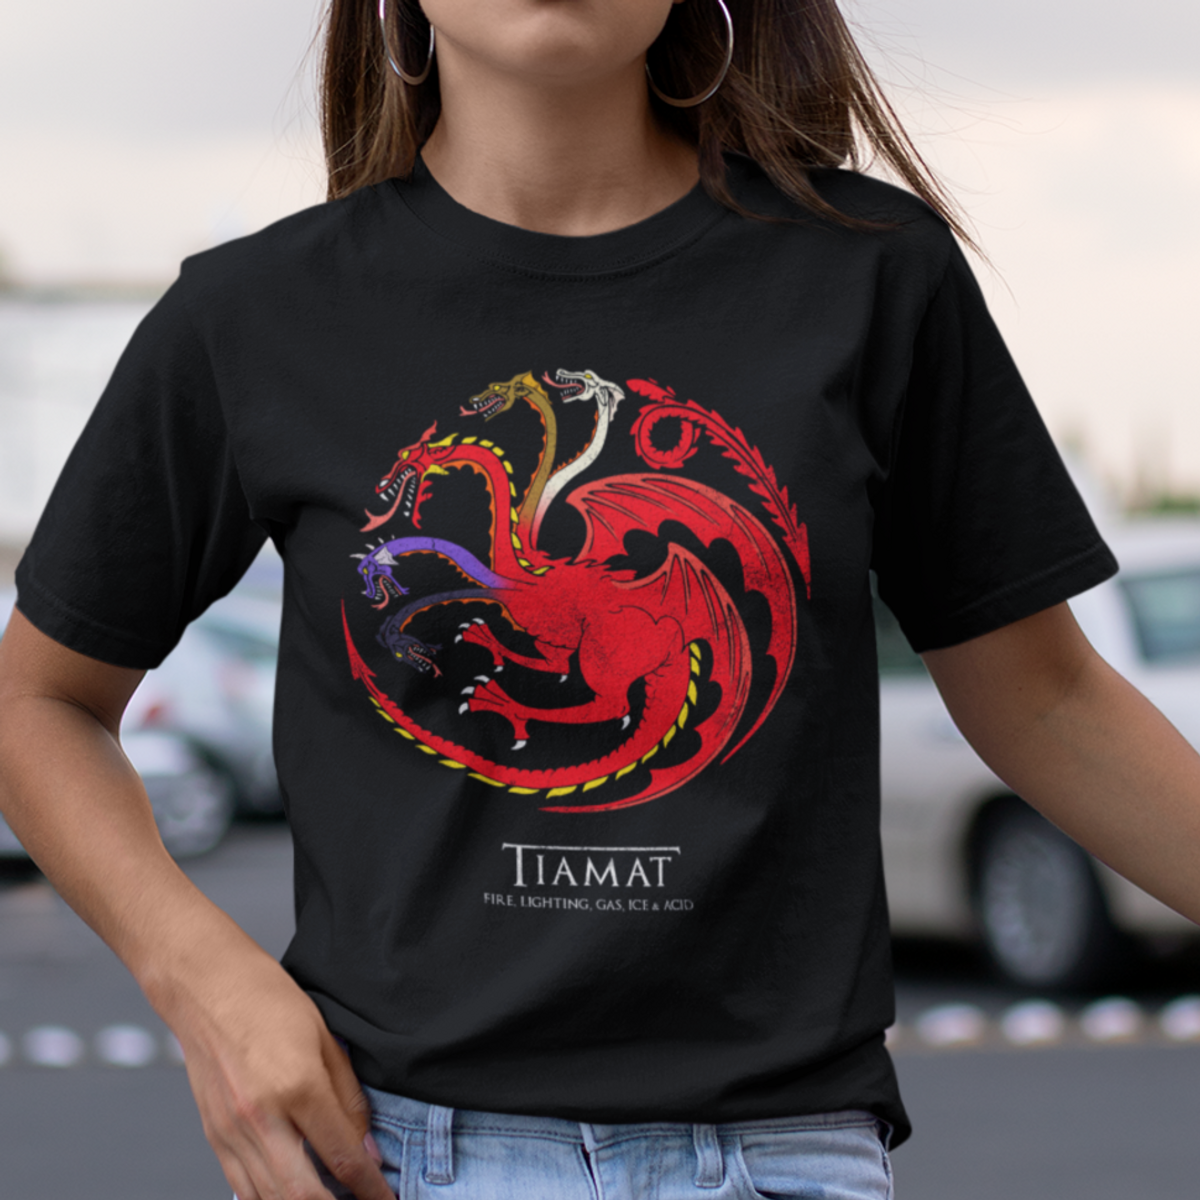 Nome do produto: Tiamat - House Of Dragons